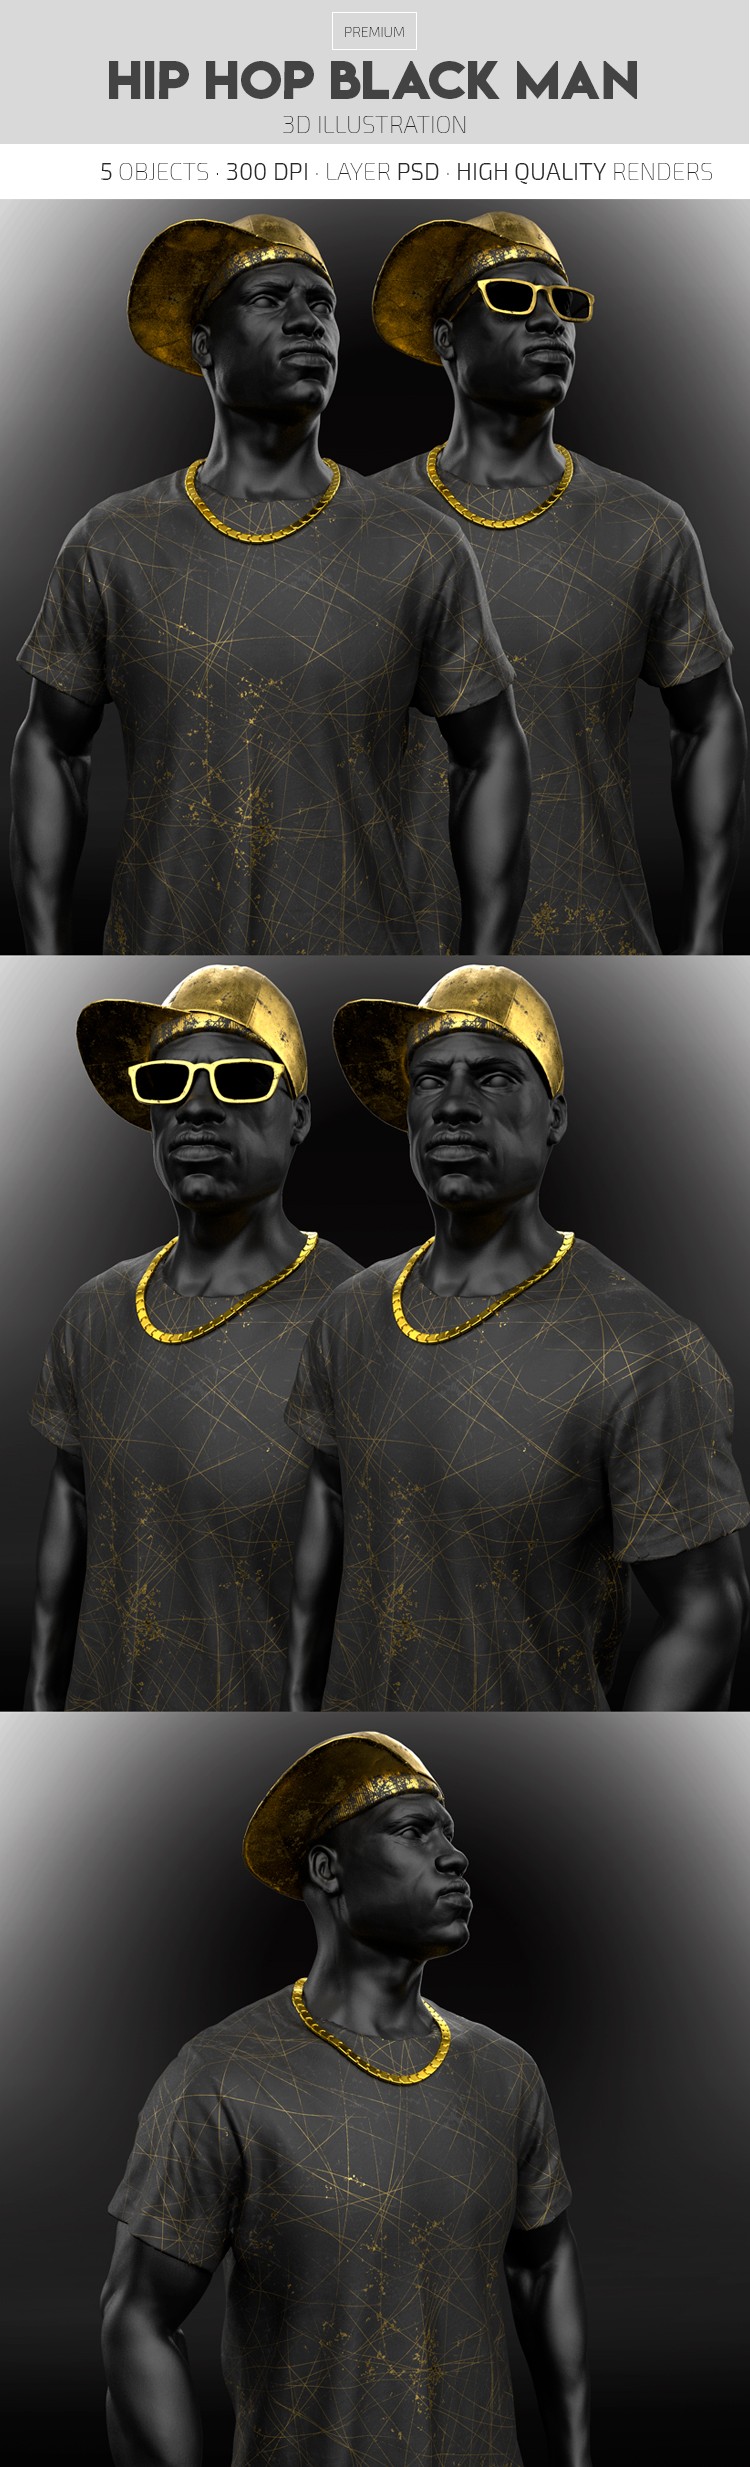 Hip-Hop Black Man by ElegantFlyer